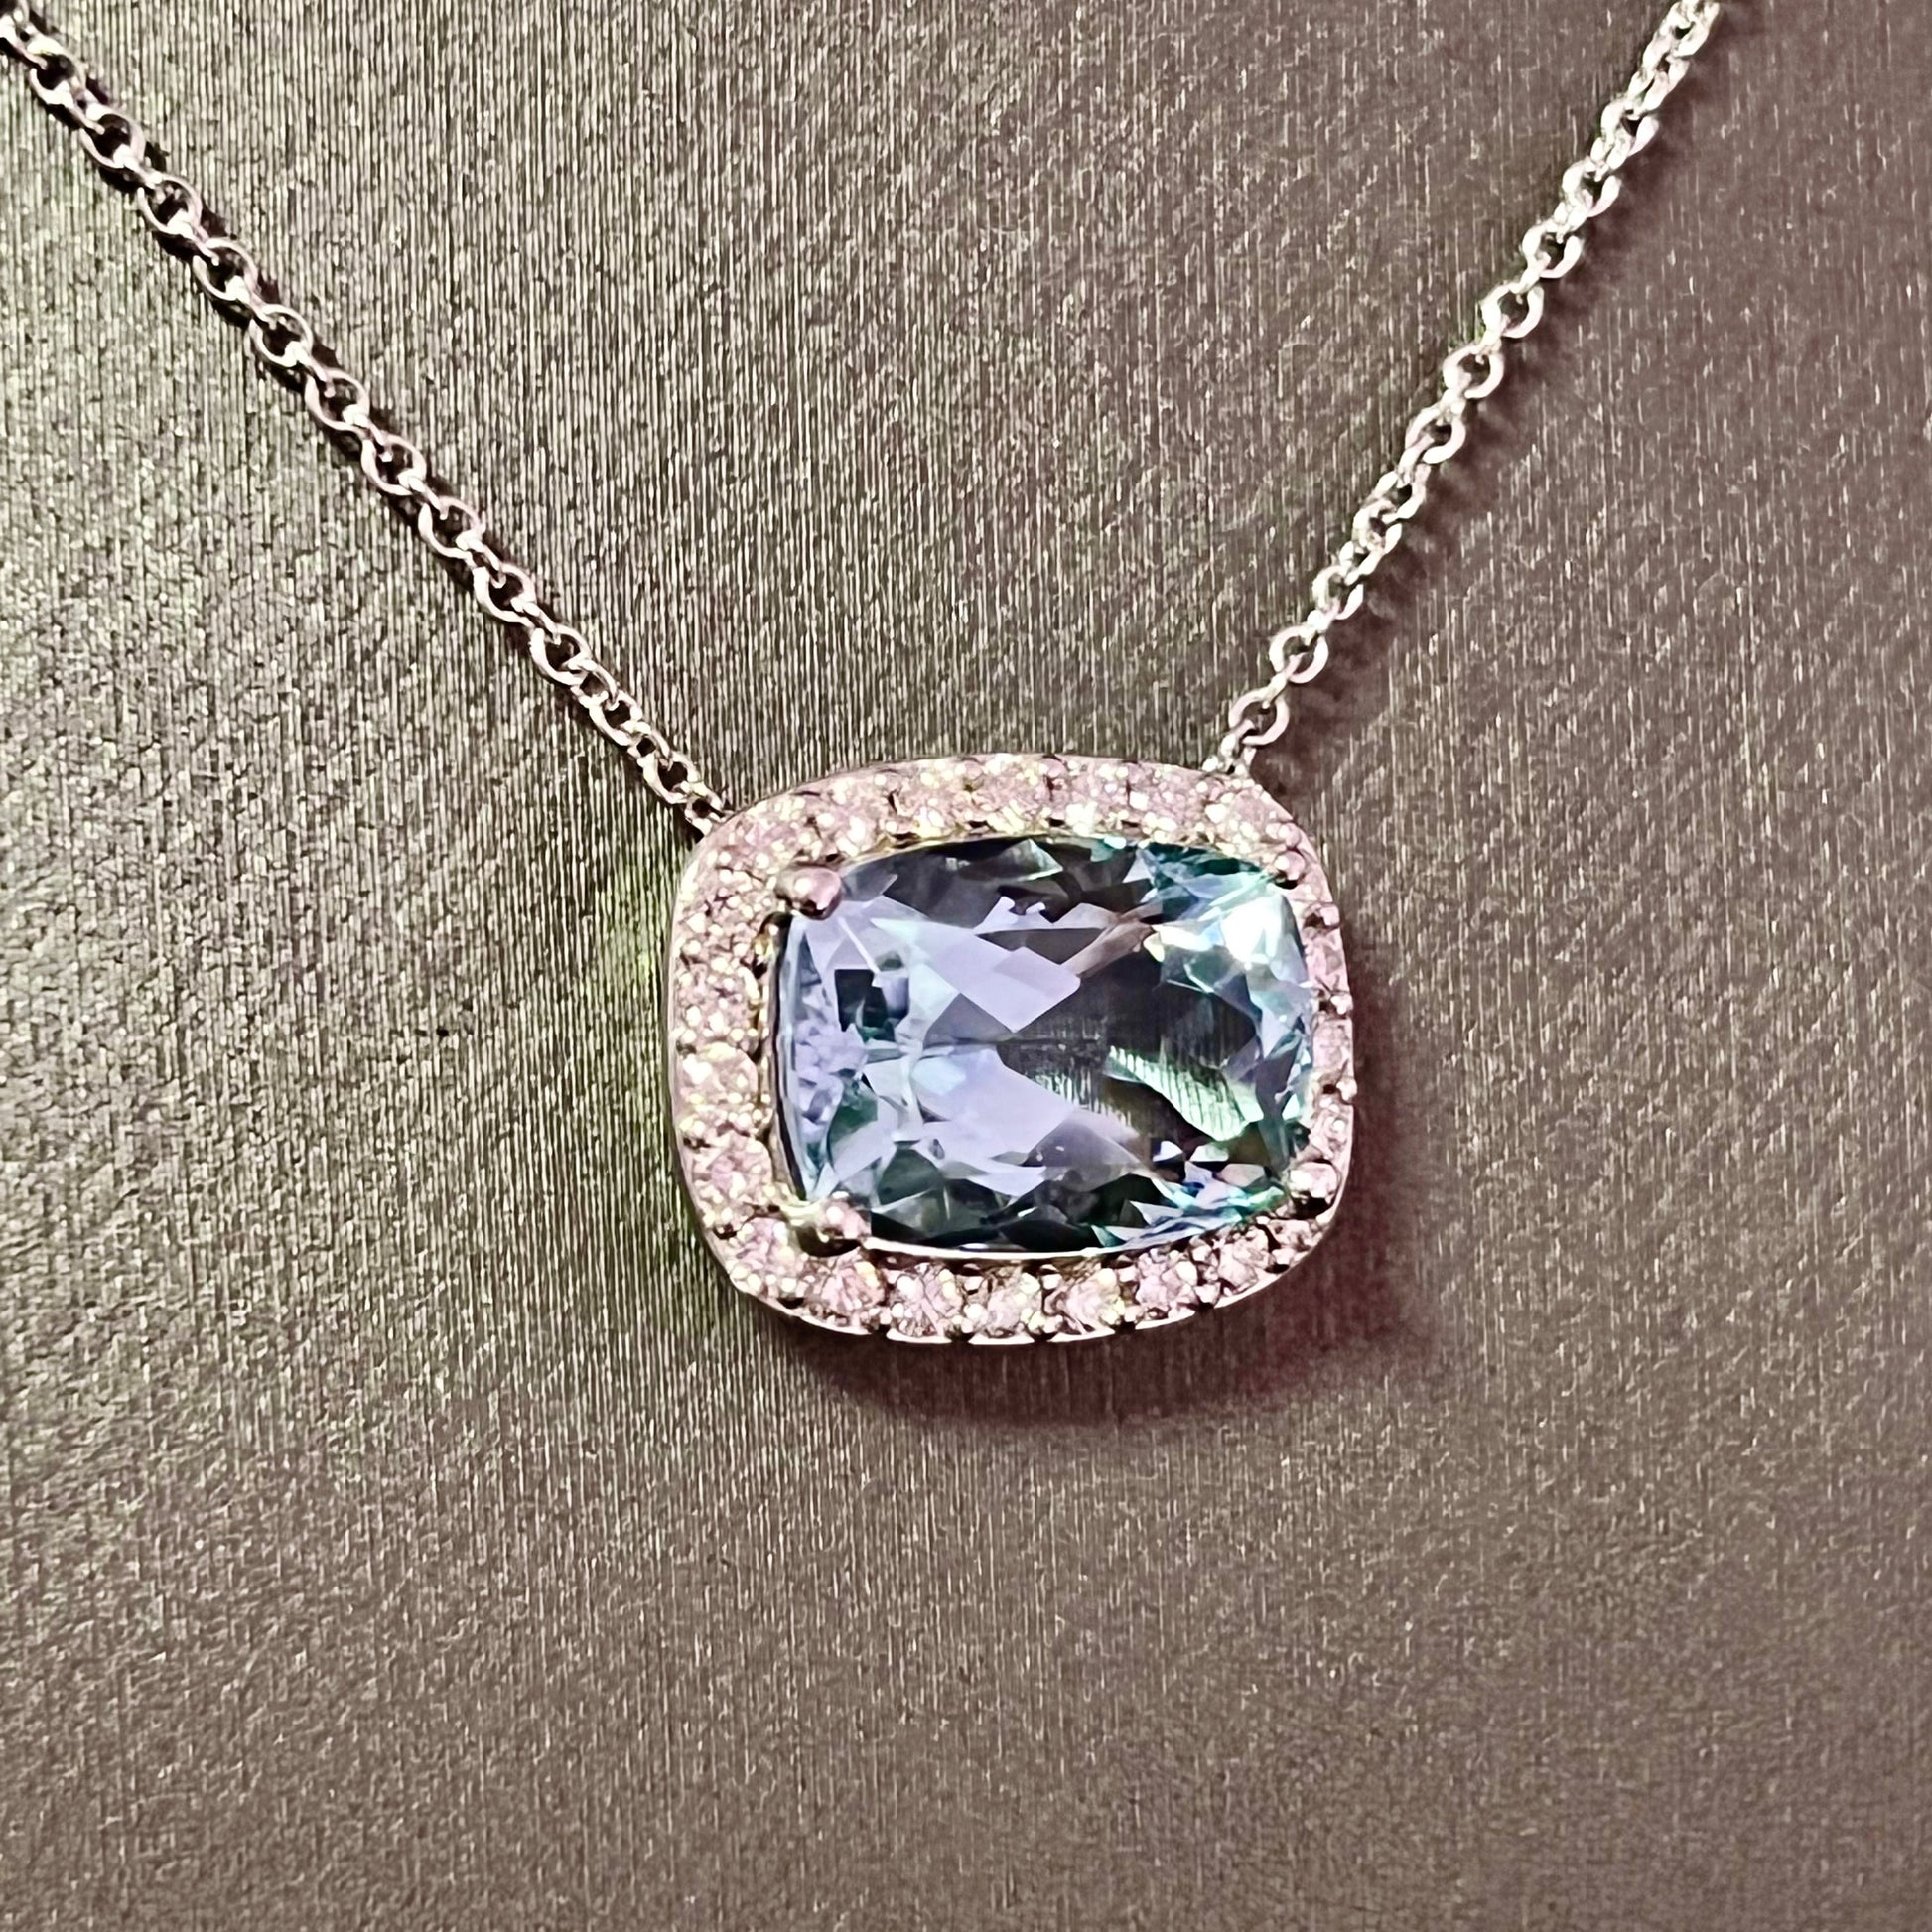 Diamond Aquamarine Pendant Necklace 14k Gold 17" 8.37 TCW Certified $5,950 213255 - Certified Fine Jewelry